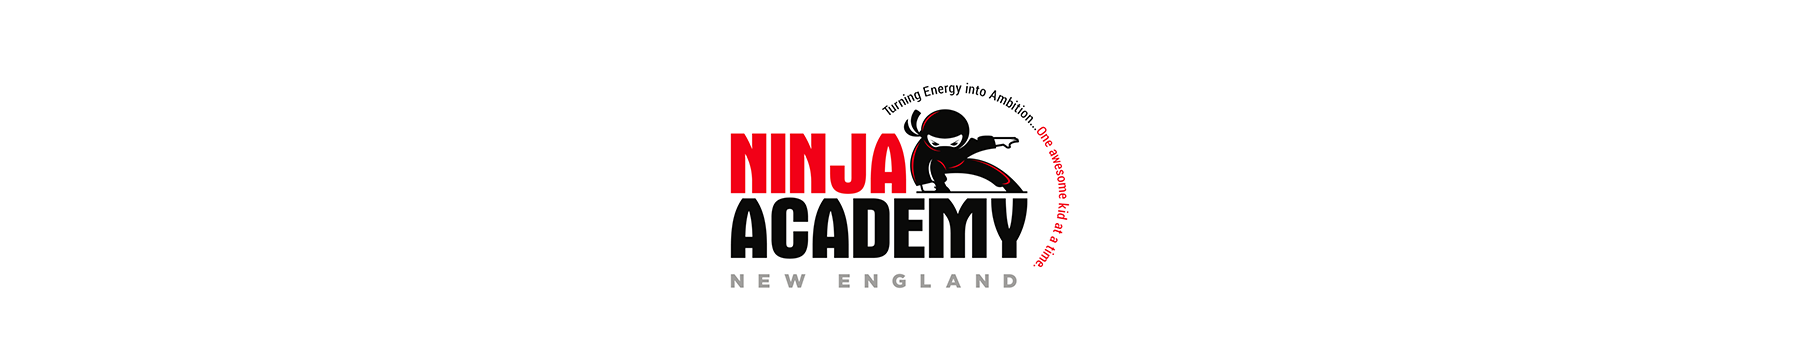 New England Ninja Academy